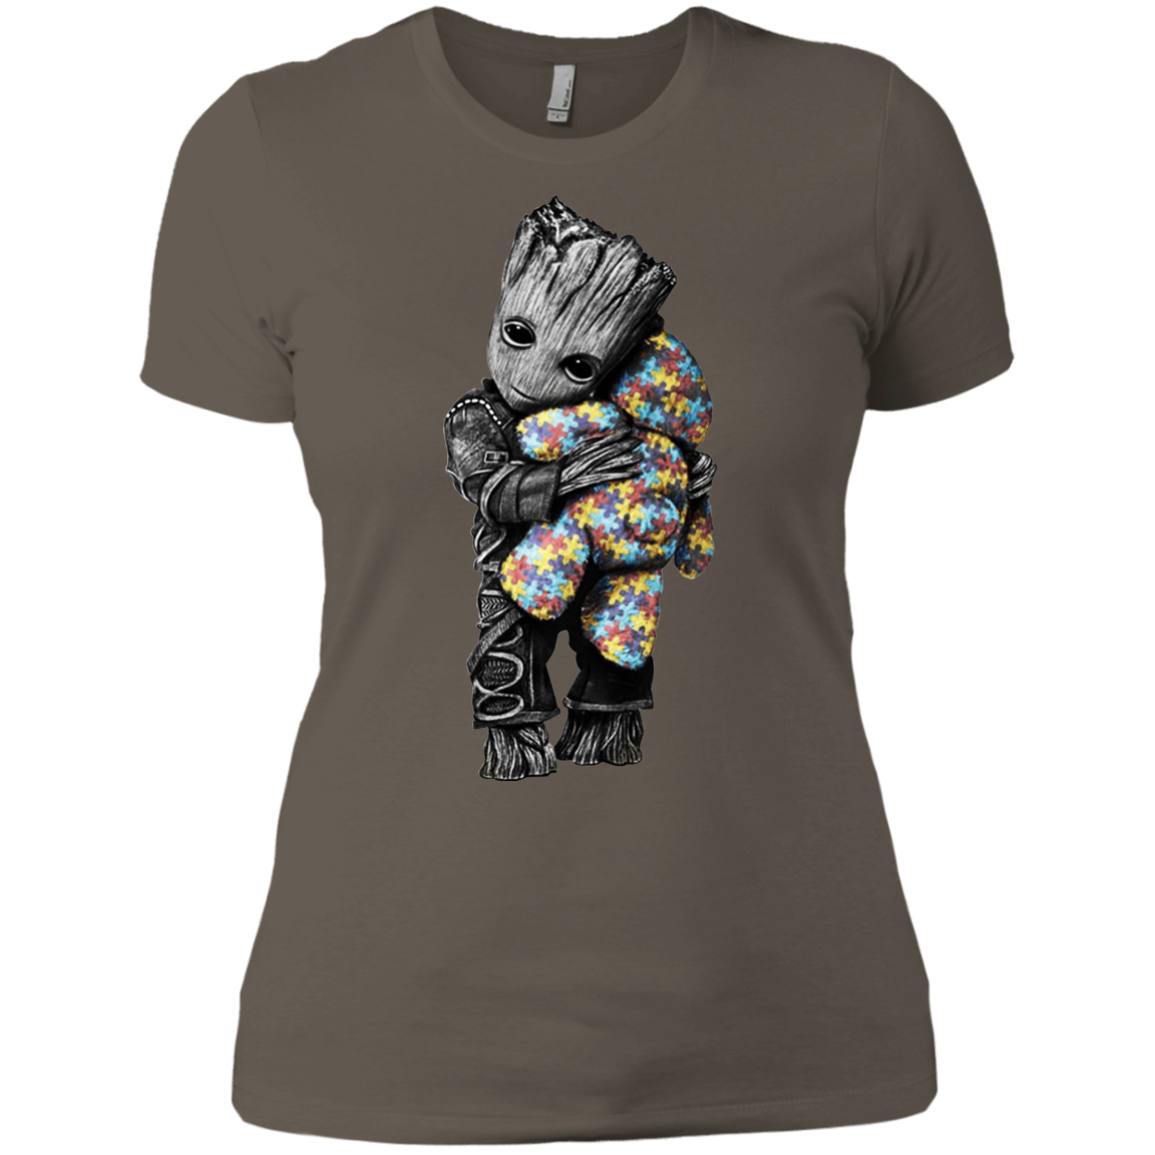 Autism Groot Hug Teddy Shirt T-shirt For 